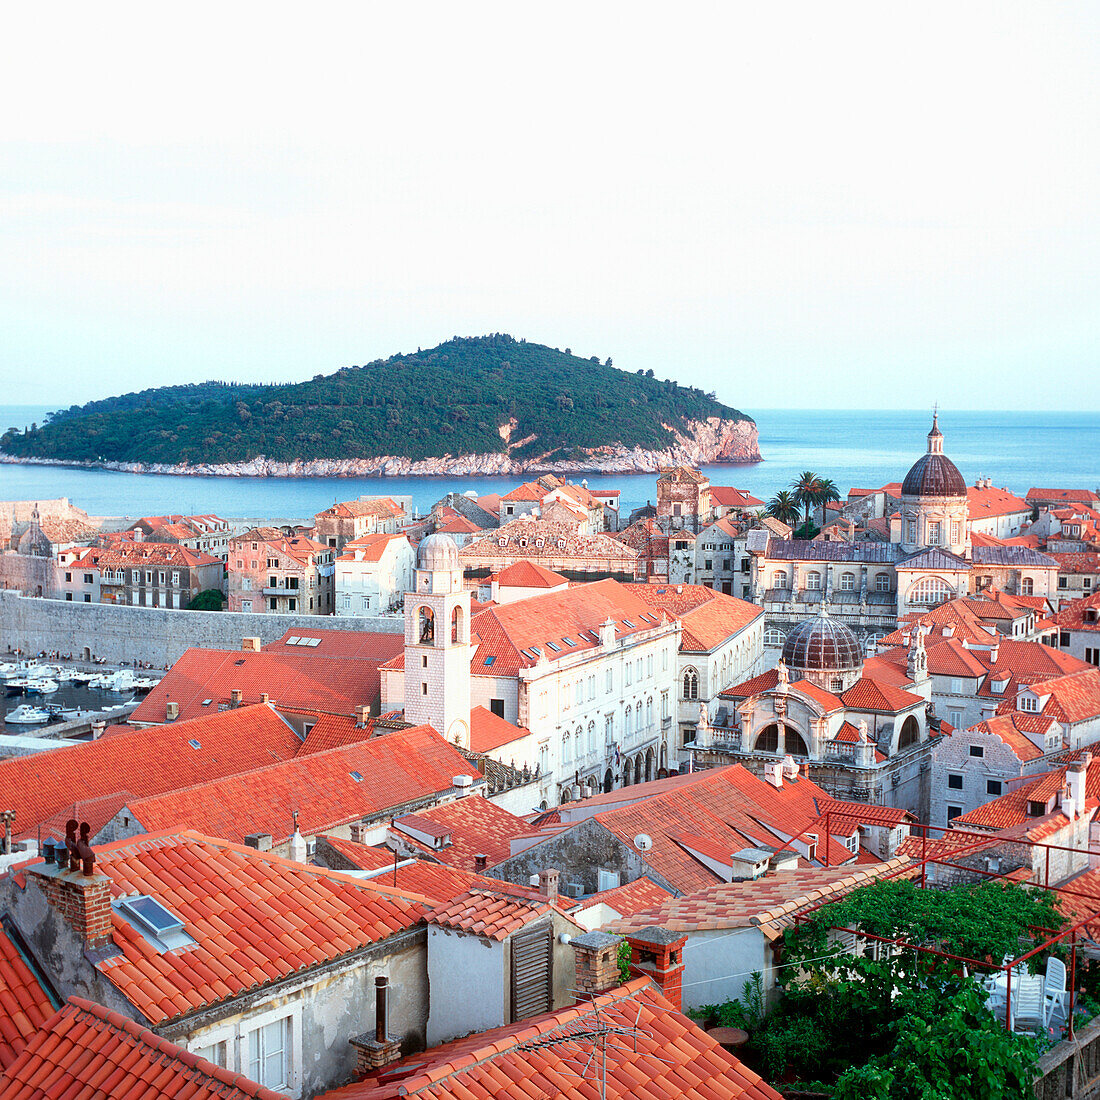 View over Dubrovnik's roofes to Lokrum island, Dubrovnik, Dalmatia, Croatia